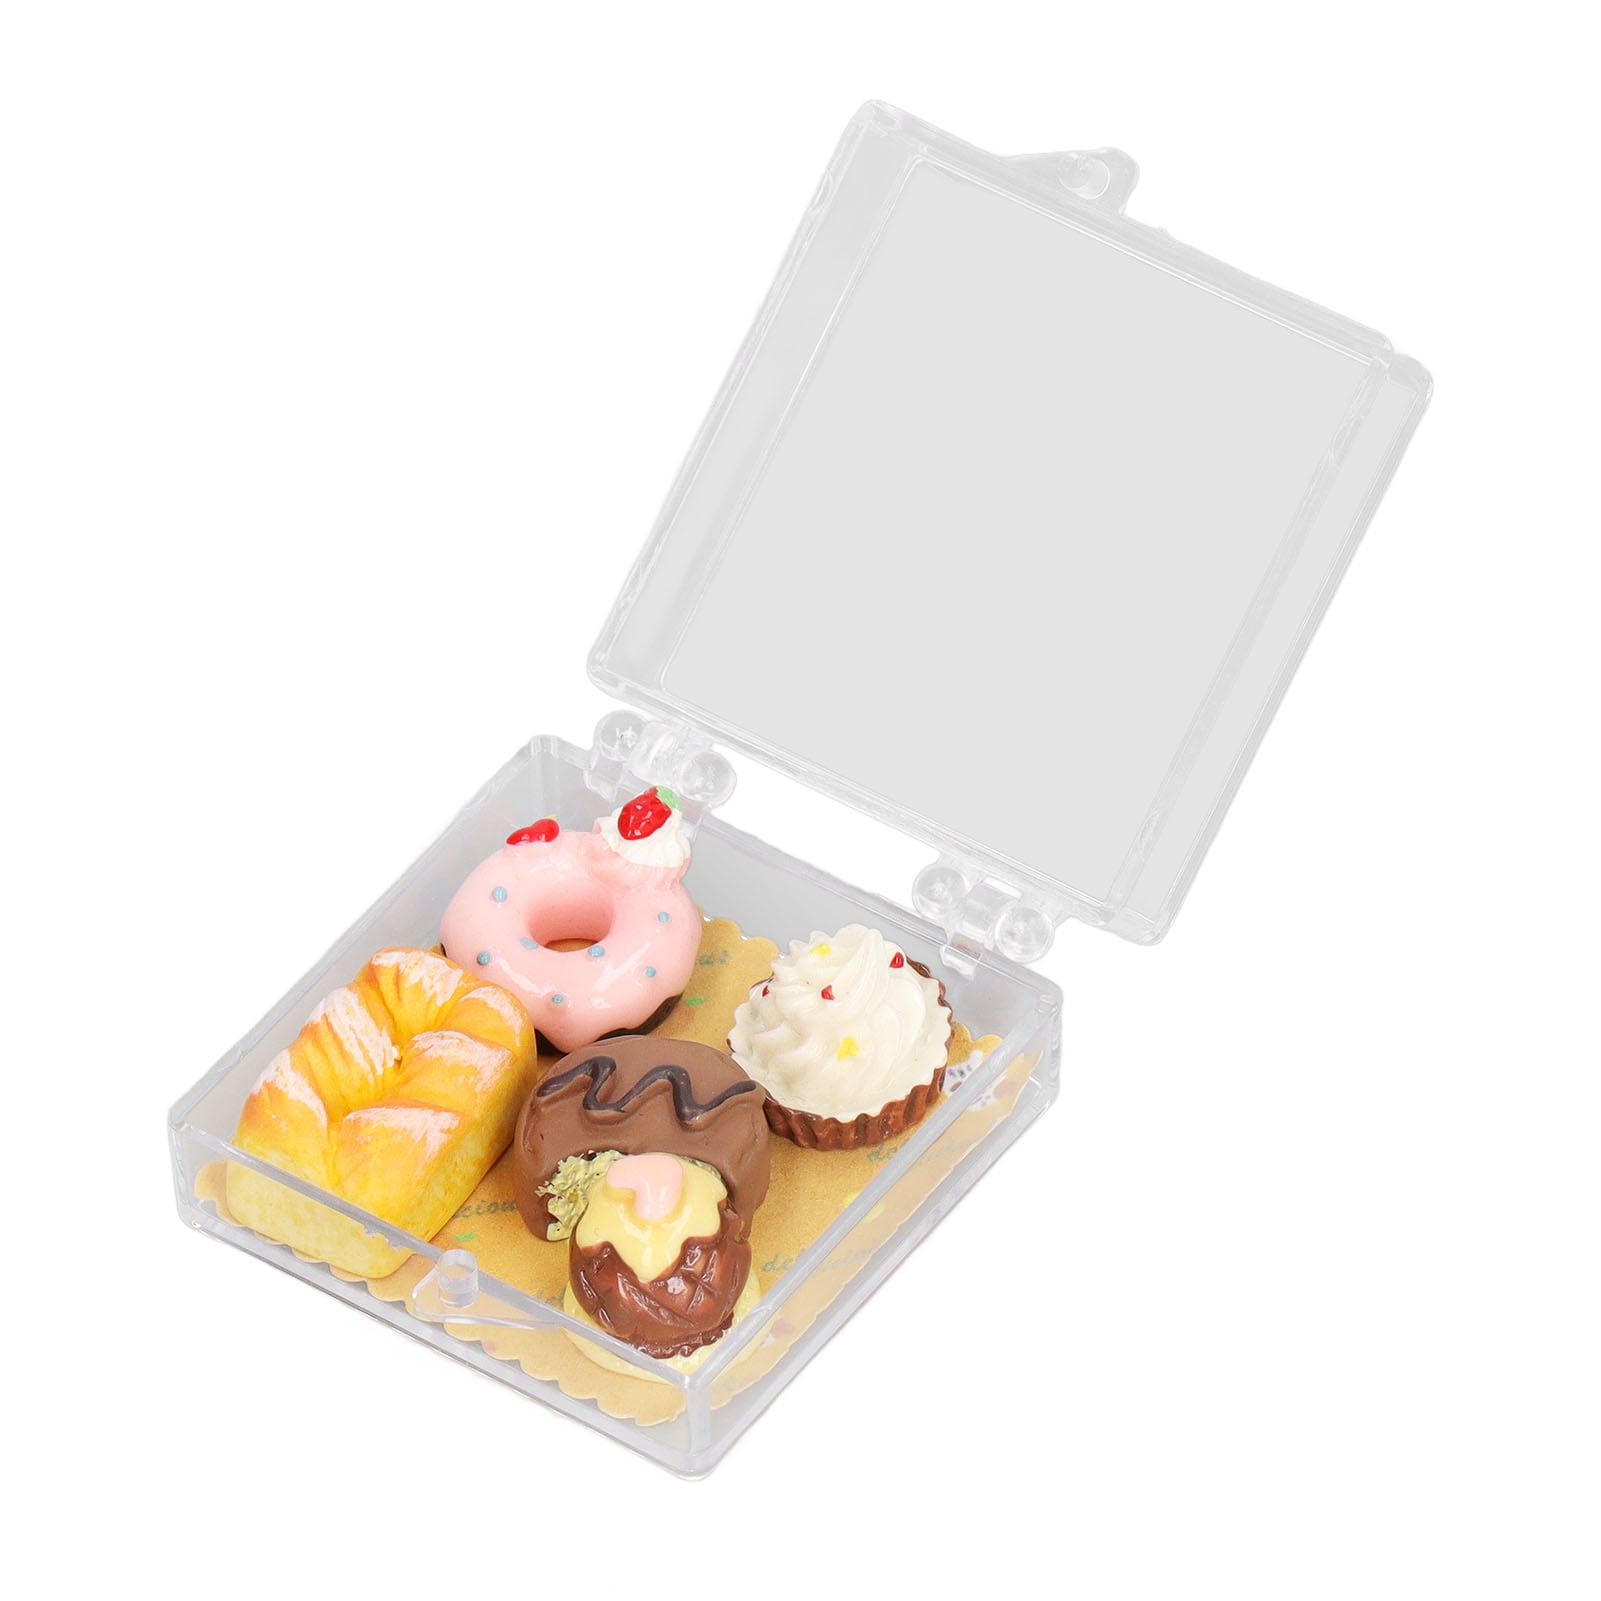 1:12 Dollhouse Scenes Mini Food Dessert Home Kitchen Accessory Toys Xmas Gift 